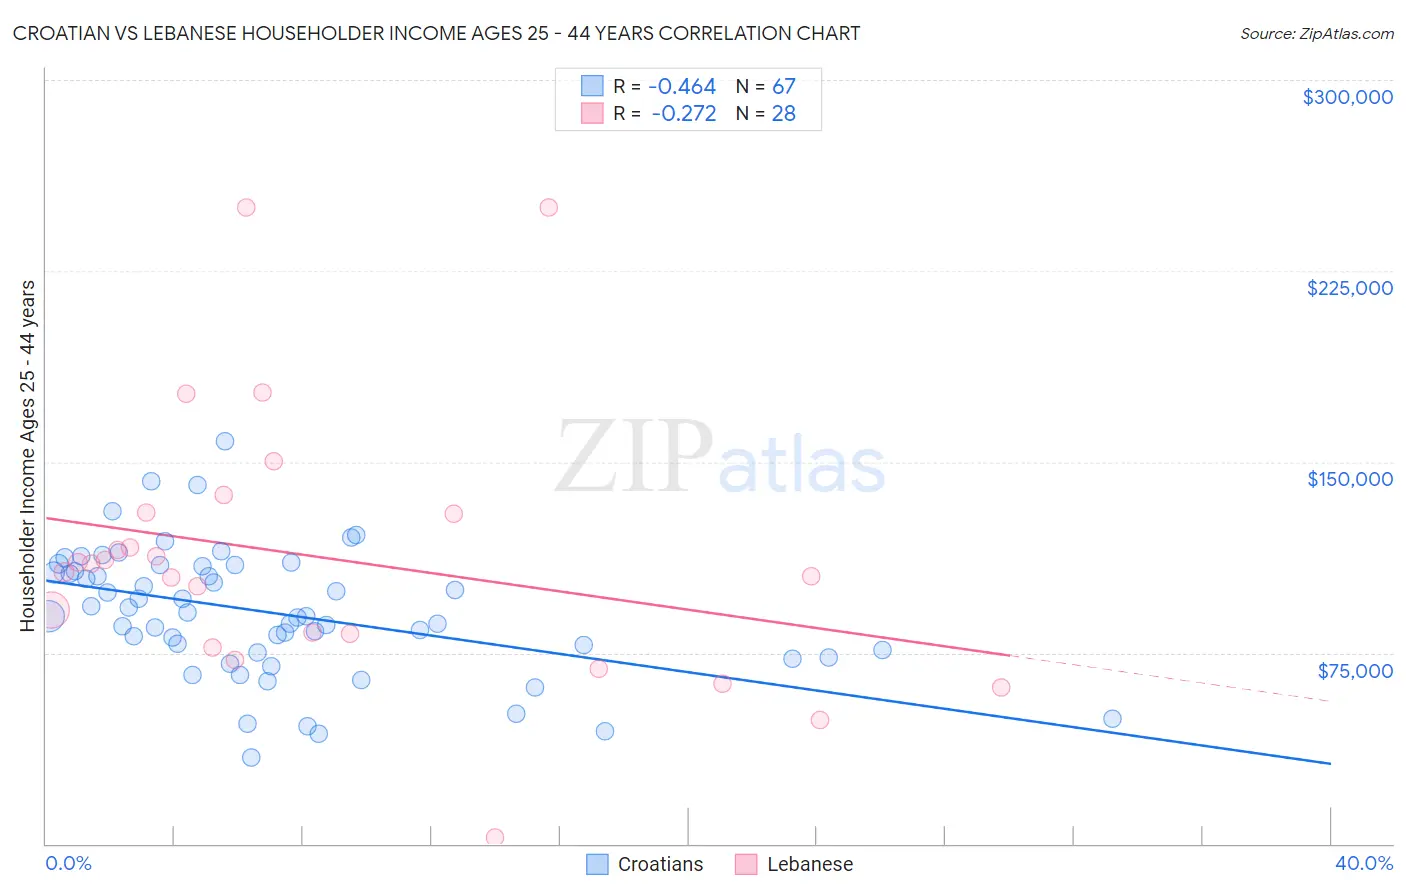 Croatian vs Lebanese Householder Income Ages 25 - 44 years